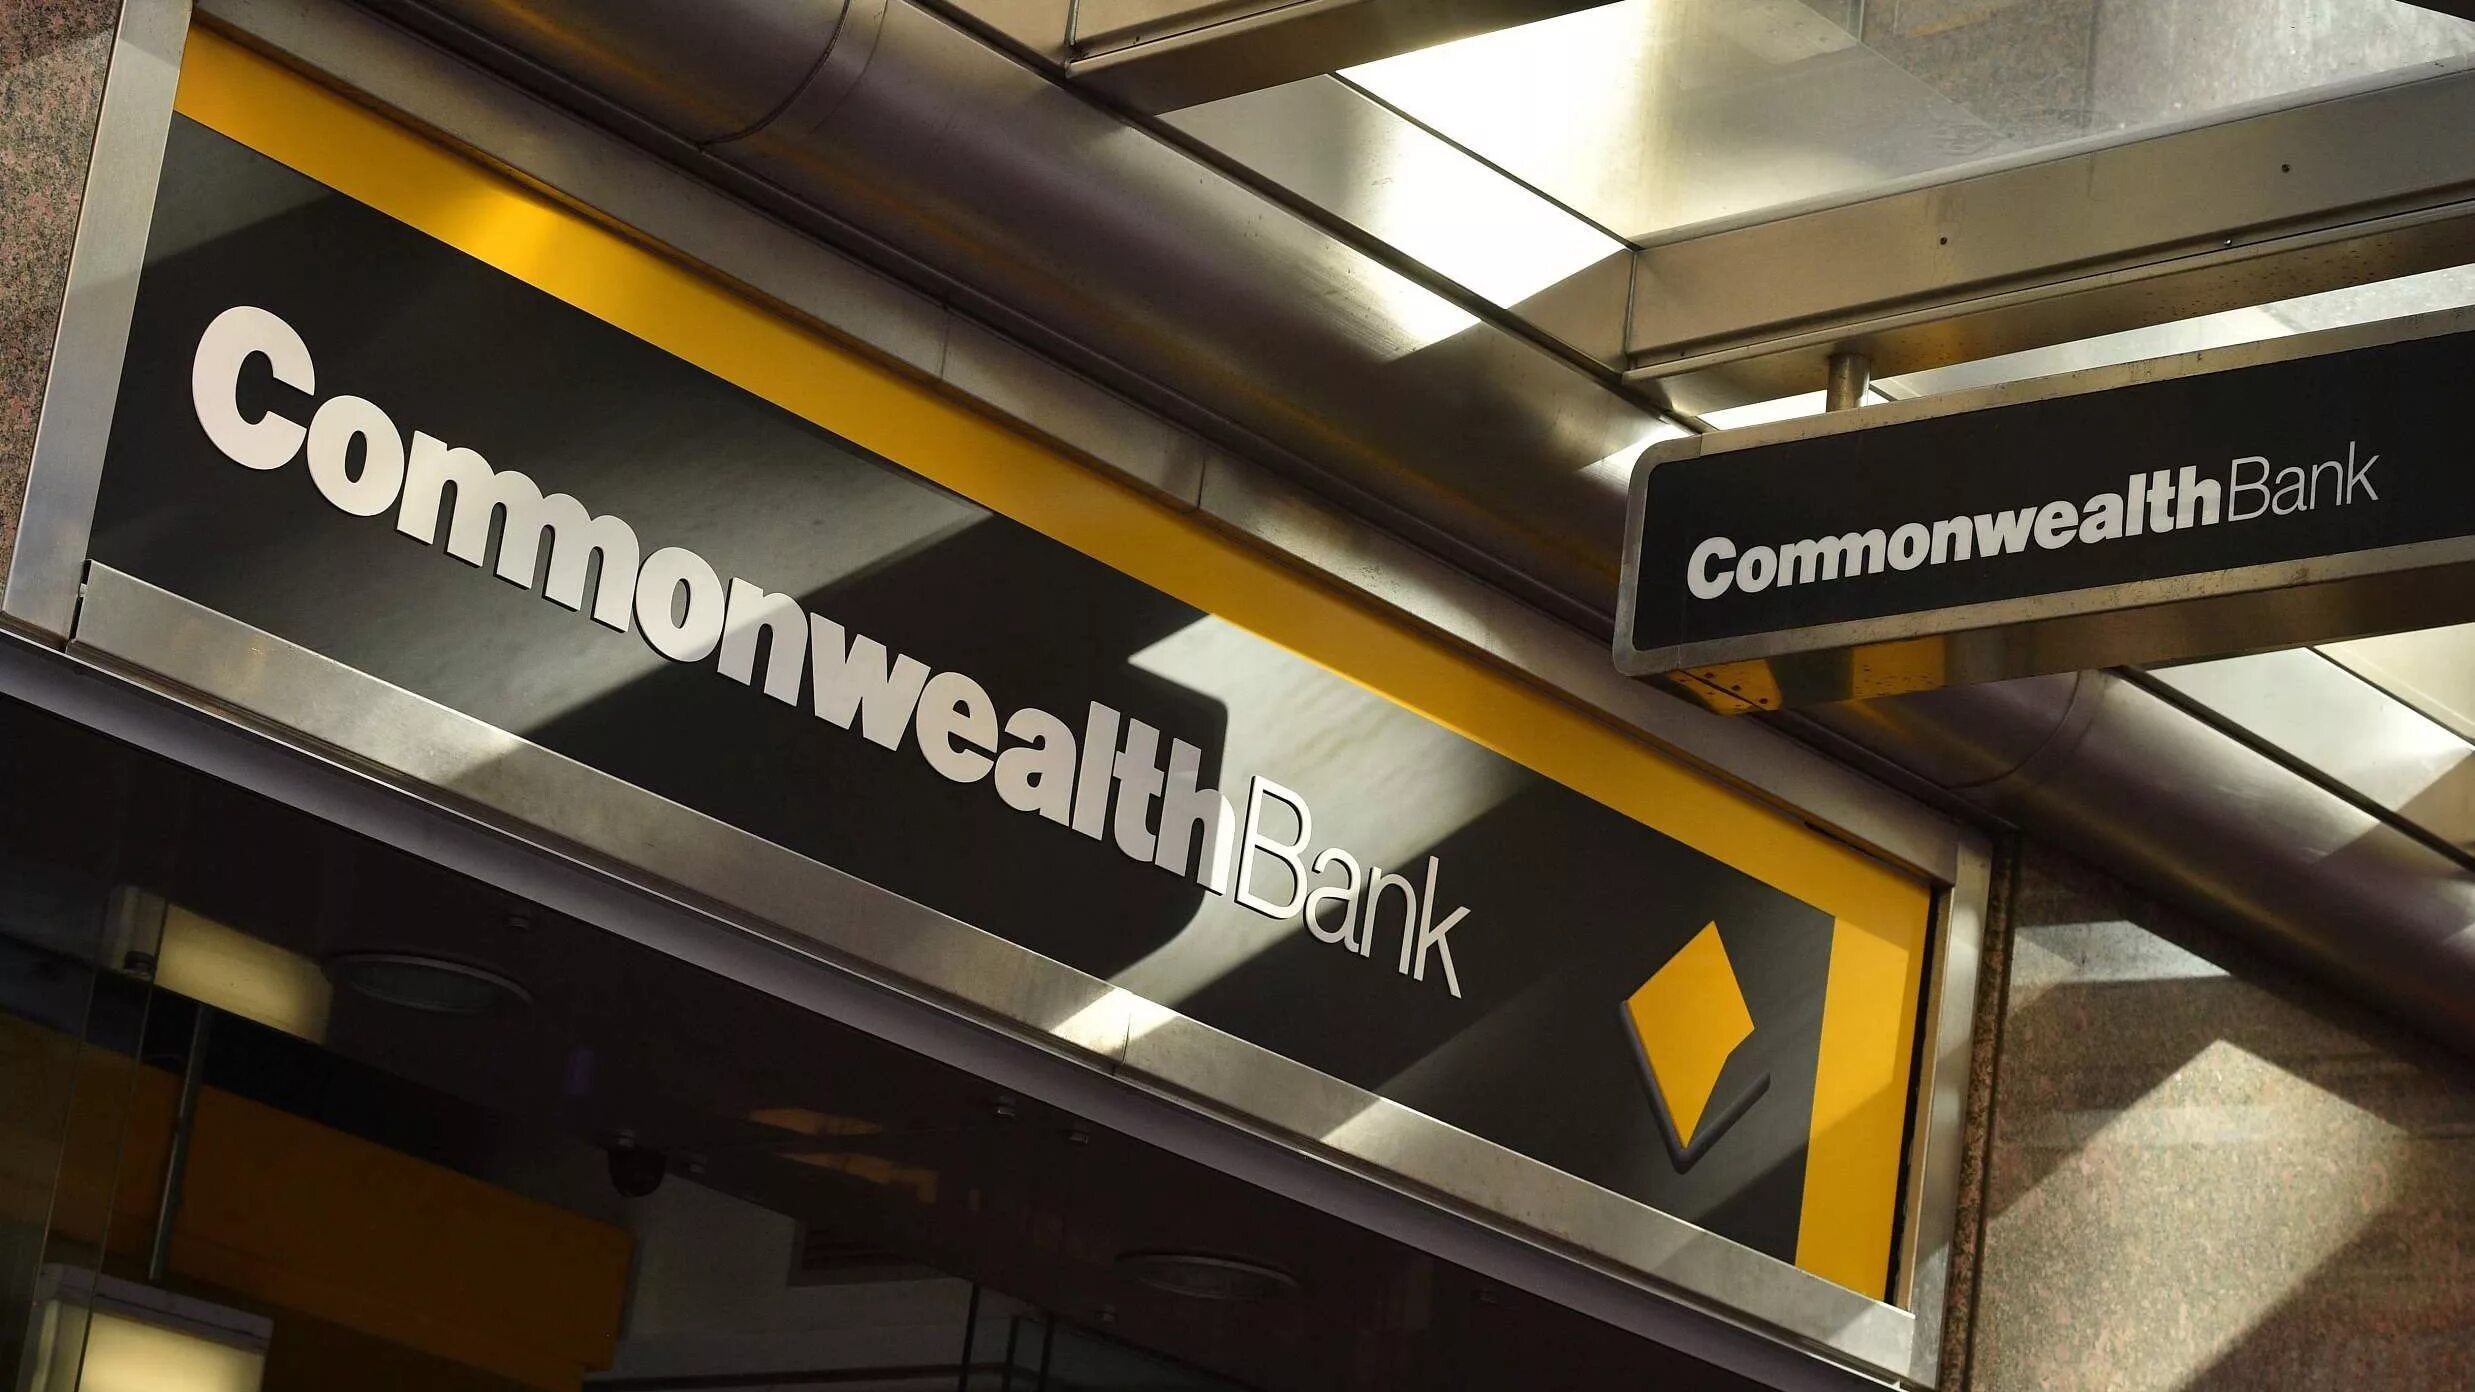 Got that bank. Commonwealth Bank. Банк Содружества Австралии. Commonwealth Bank лого. Commonwealth Bank of Australia лого.